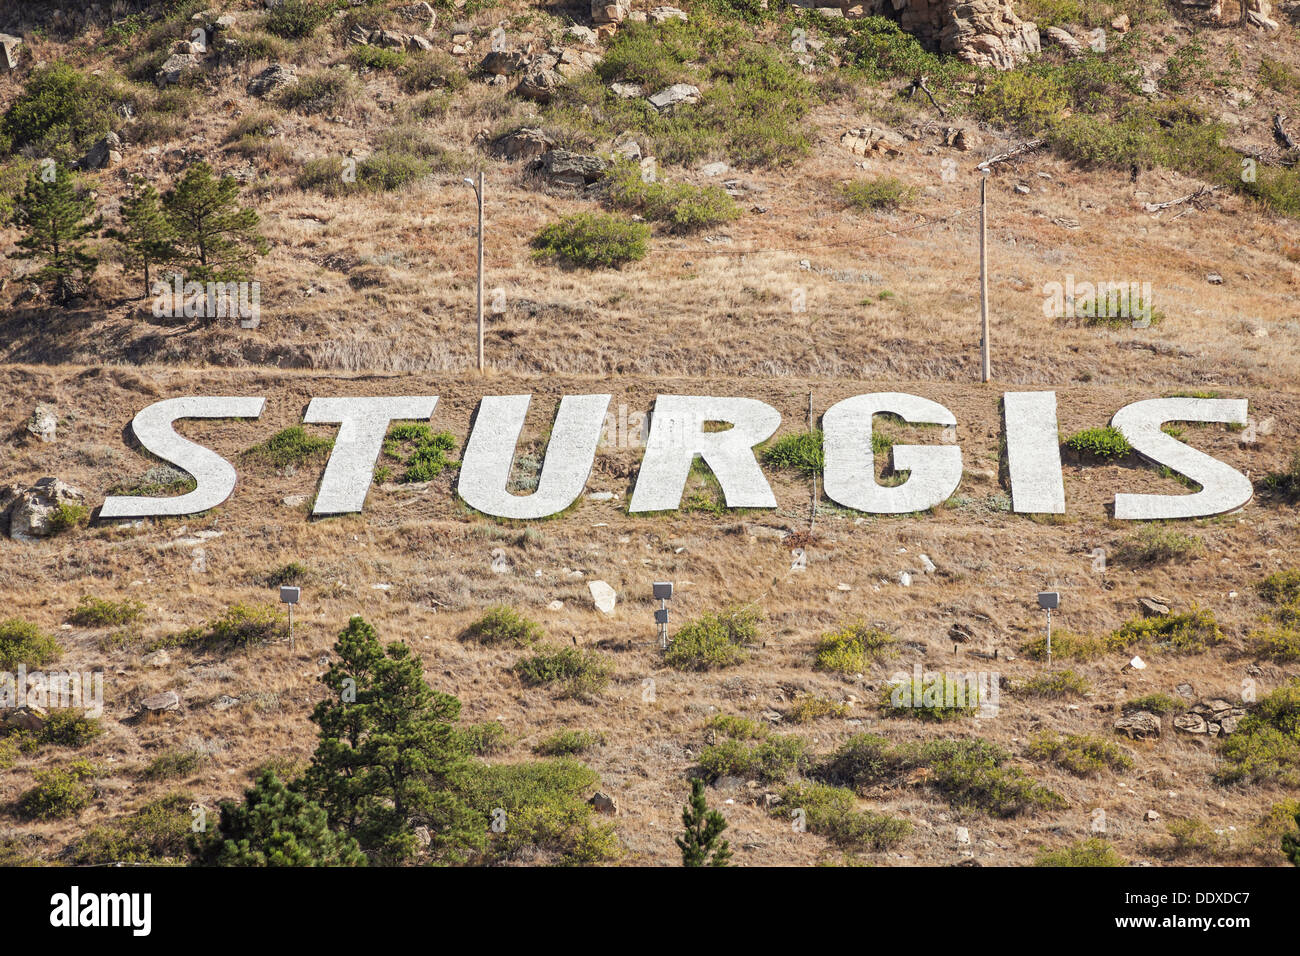 Sturgis sign on hillside, South Dakota Stock Photo